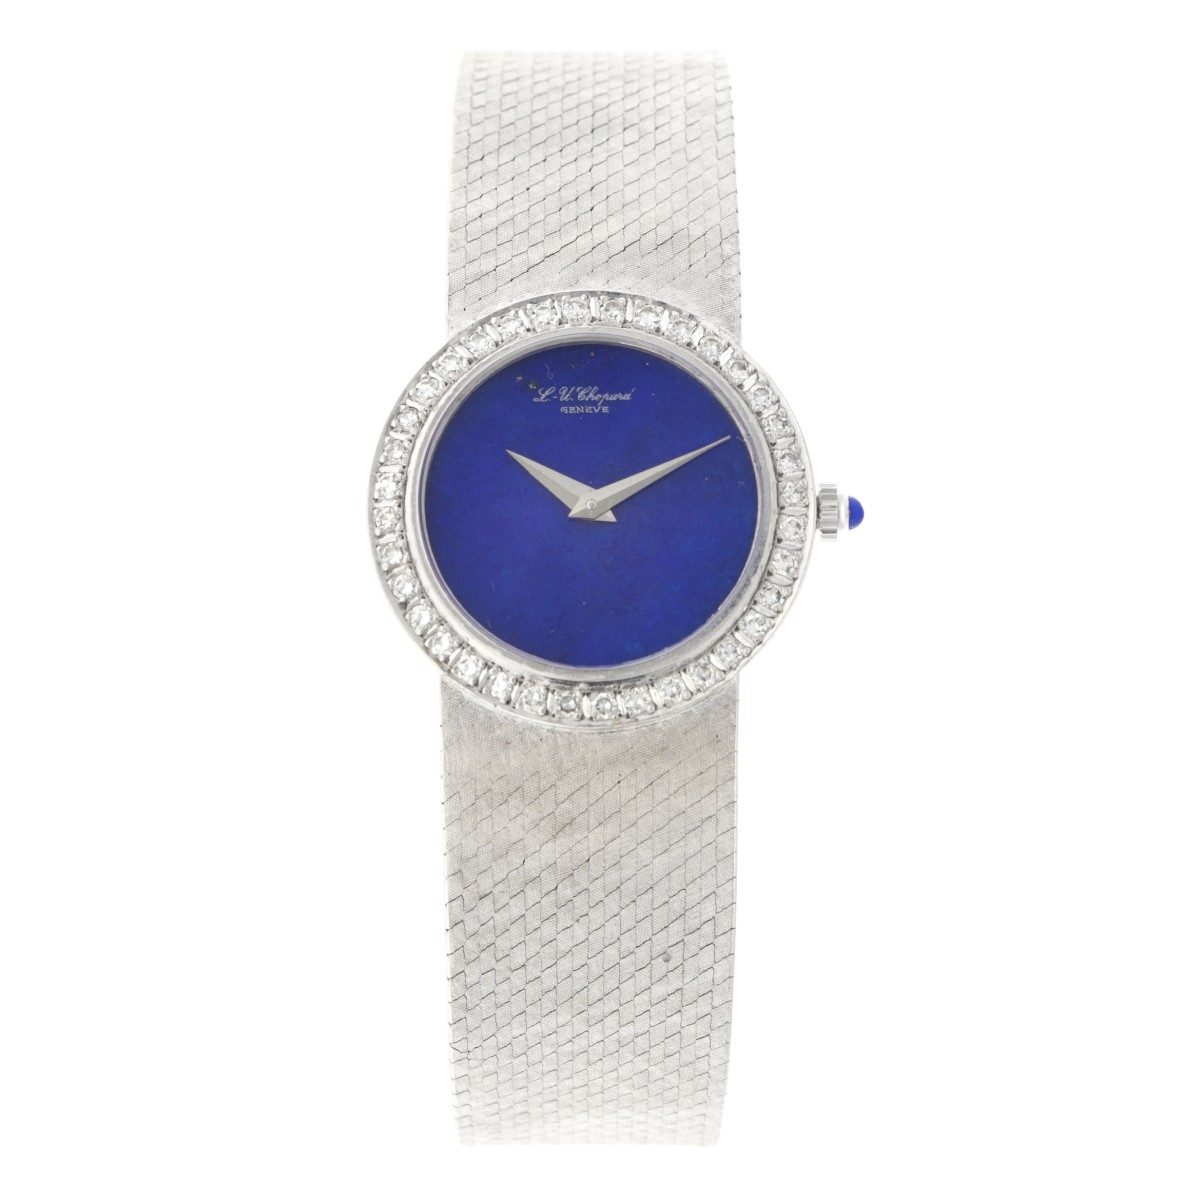 Chopard Vintage 18K. Lapis Lazuli - Dames horloge - ca. 1970's.